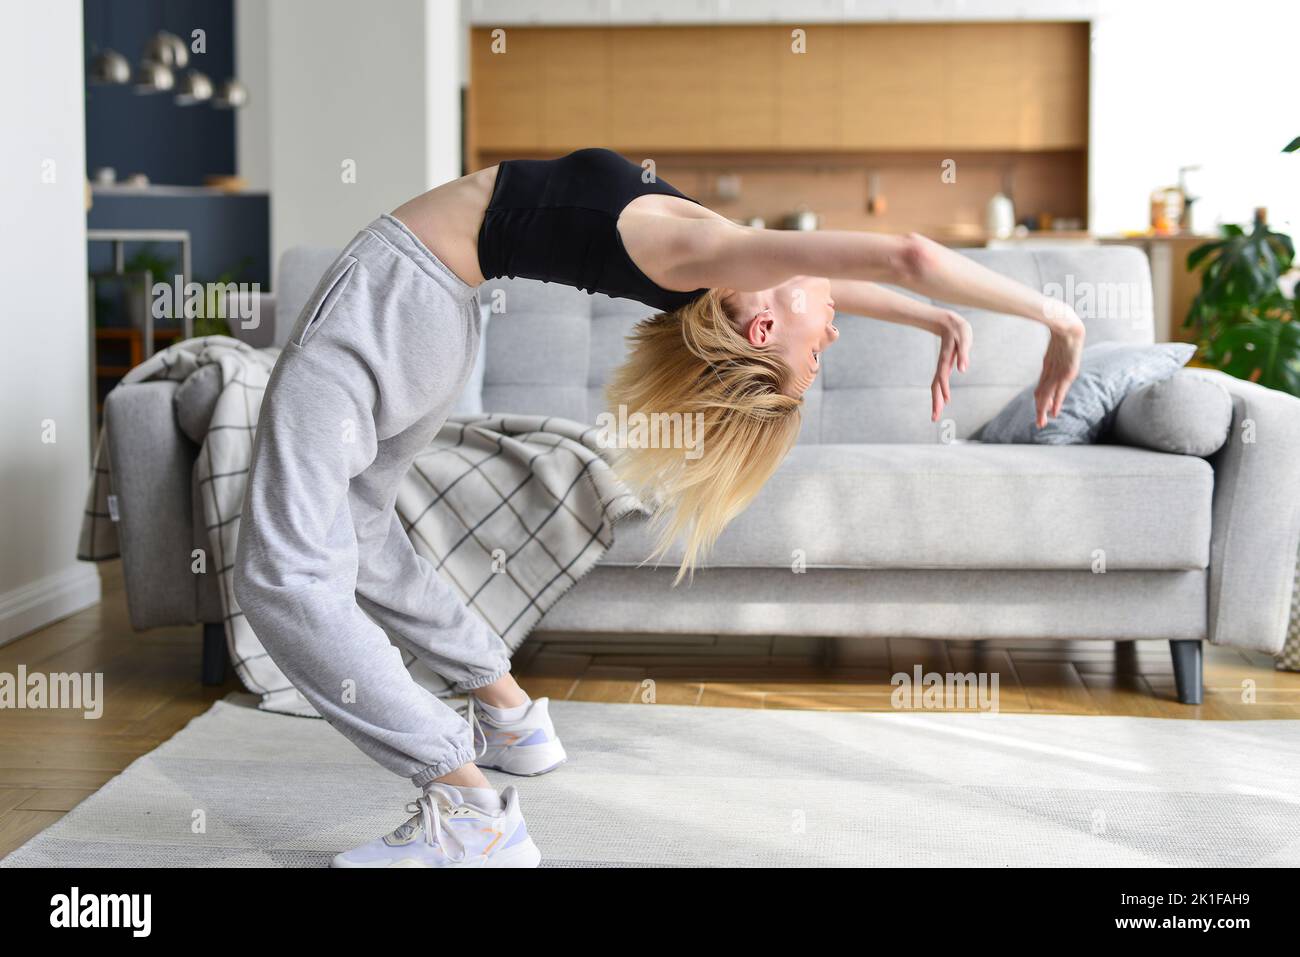 Woman performs bridge exercise at home Stock Photo